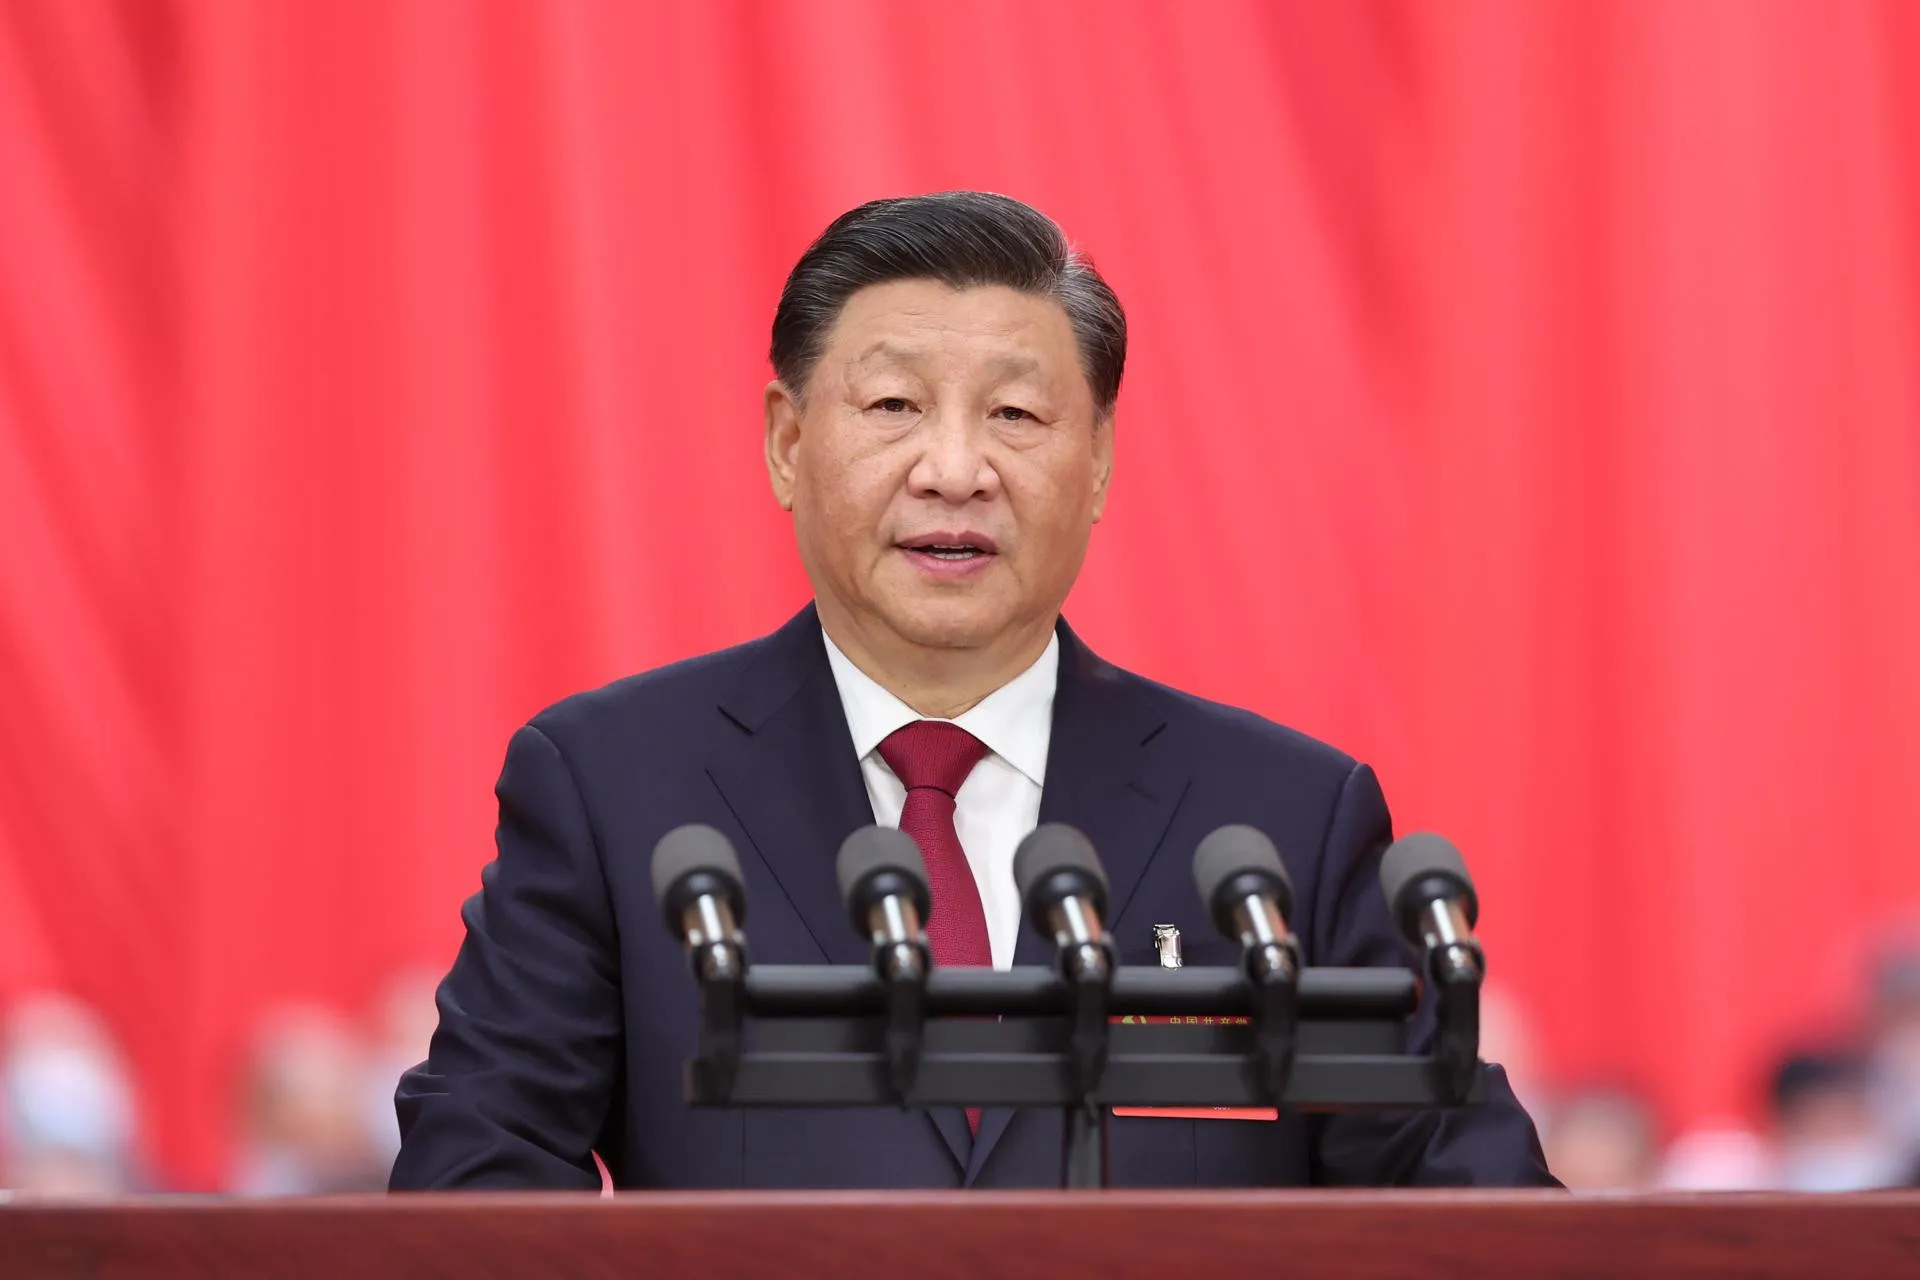 Xi Jinping, reelegido para un tercer mandato presidencial, revalida su poder absoluto en China